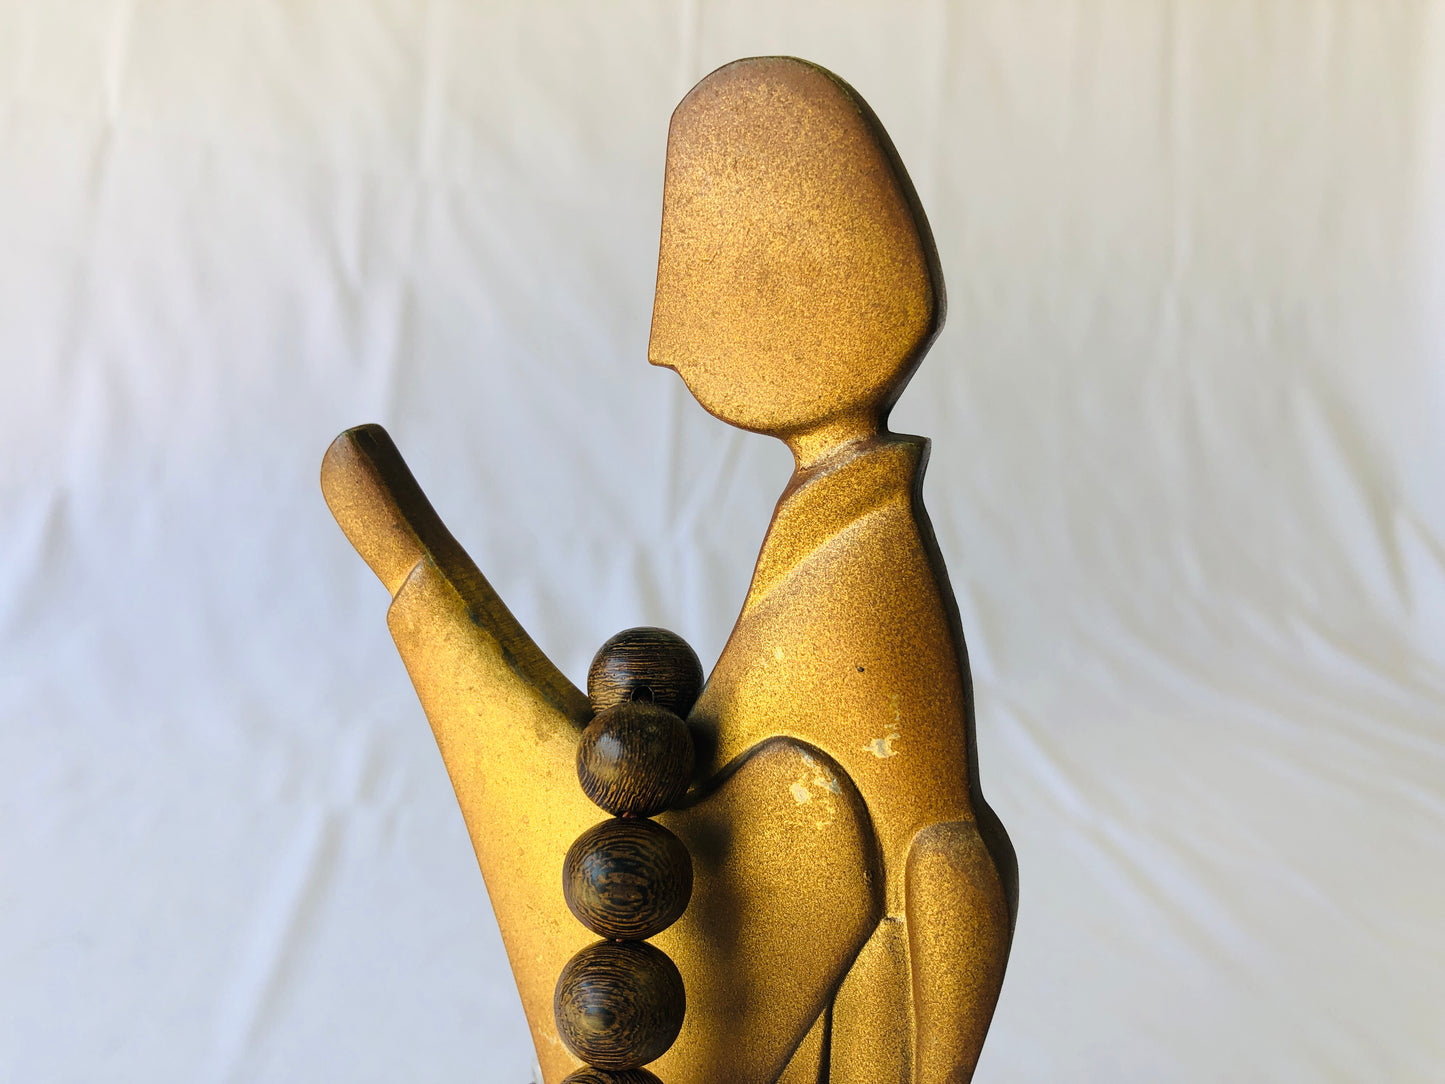 Y4509 STATUE Metal Praying Doll figure figurine Japan antique vintage decor